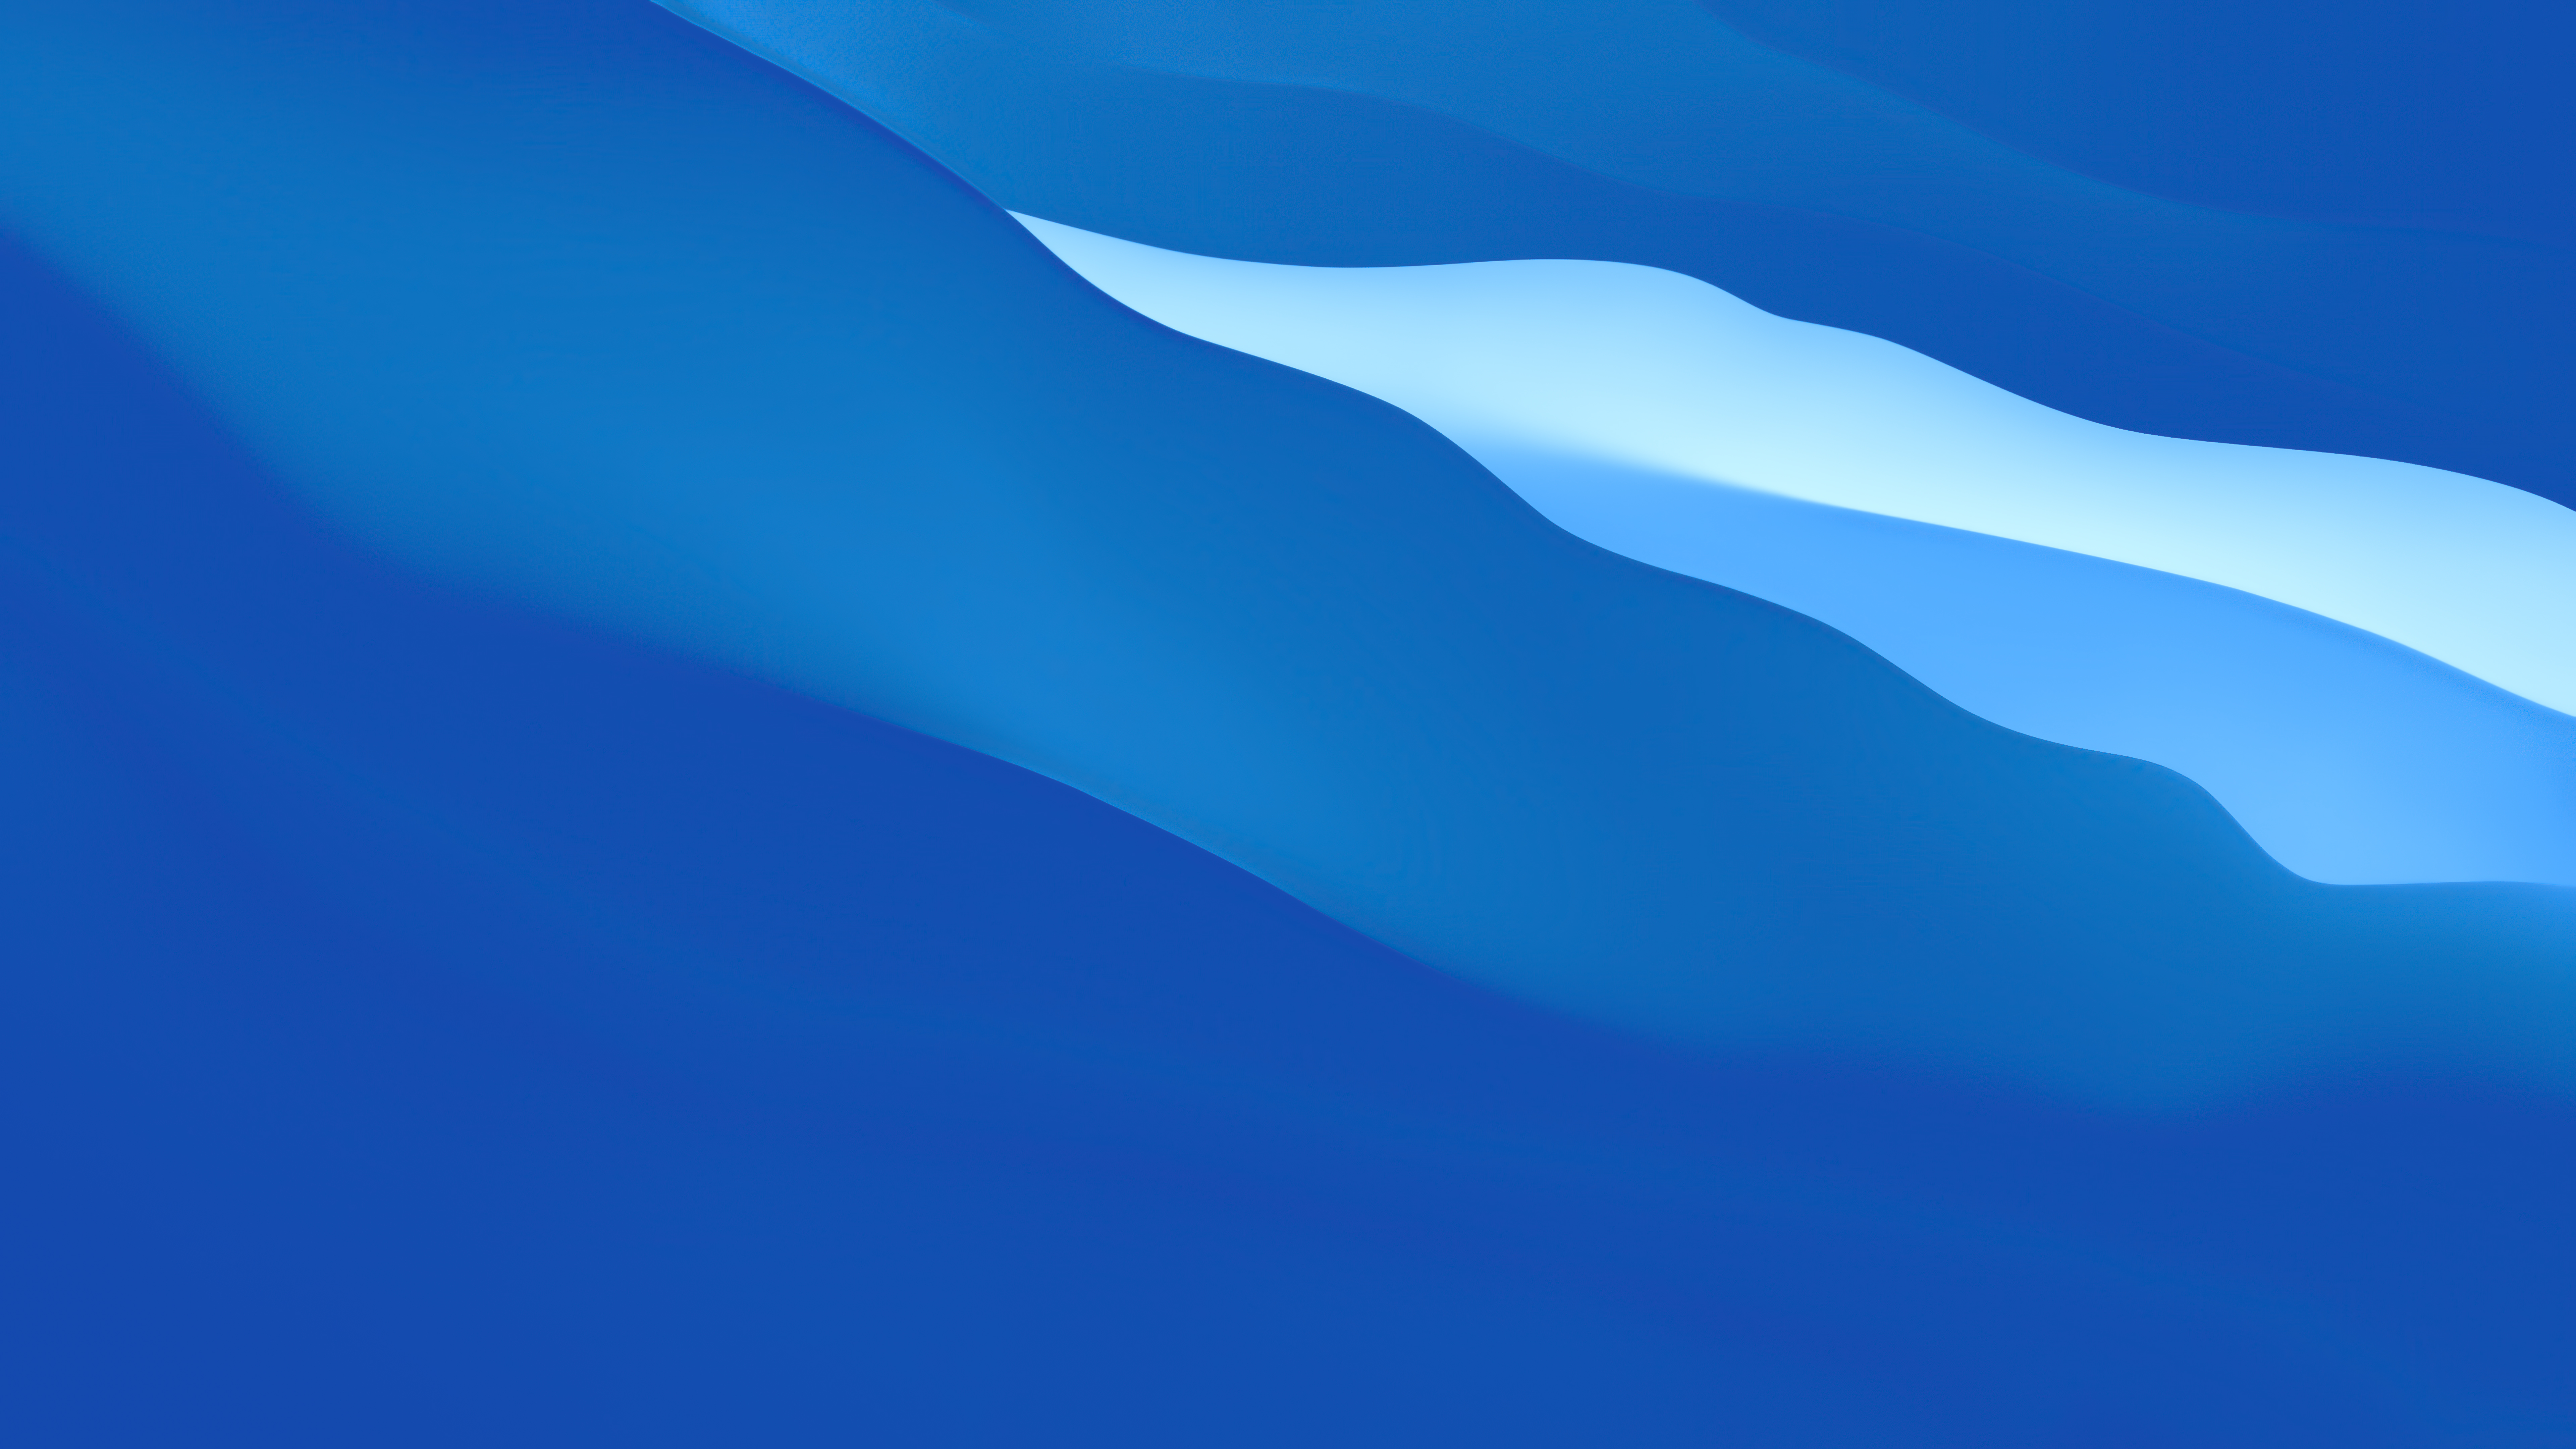 Ultra 8K Blue Wallpapers - Top Free Ultra 8K Blue Backgrounds